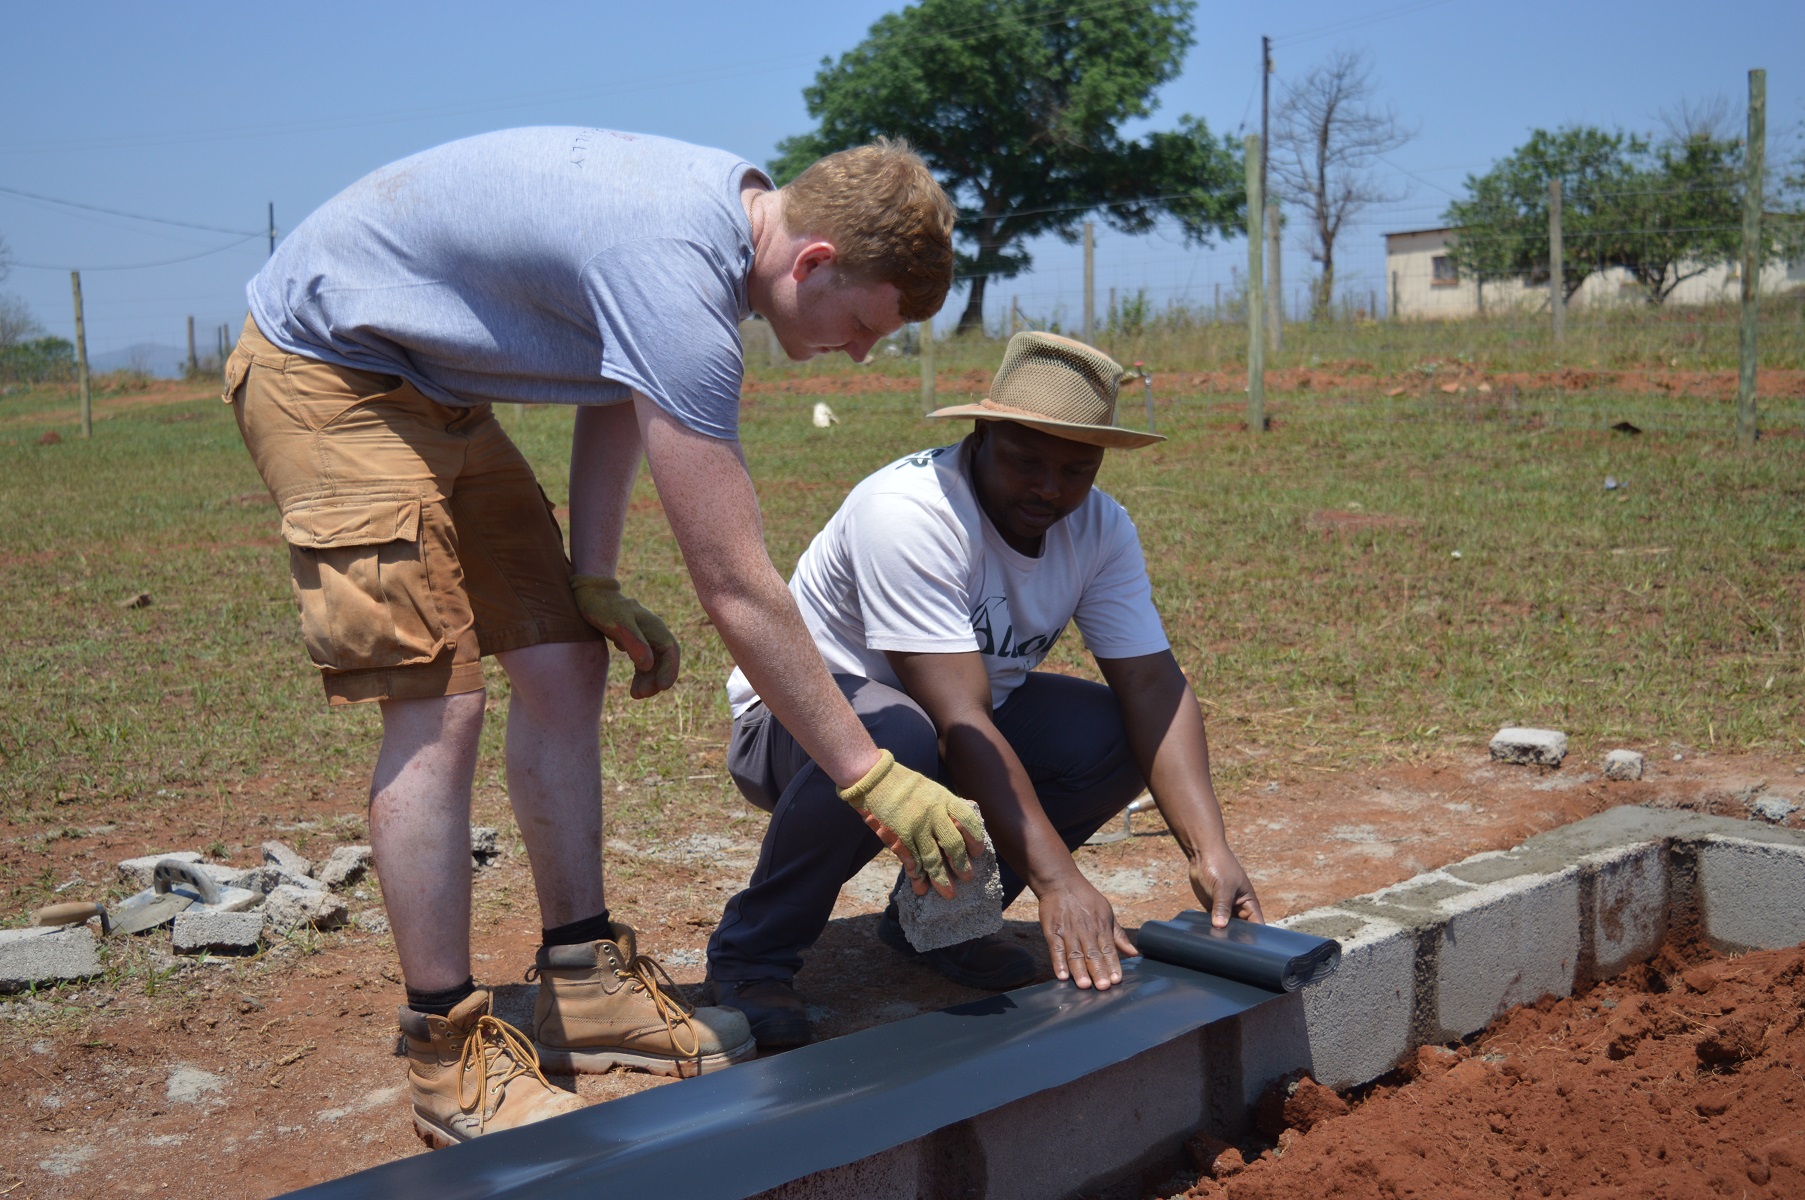 aifs-swasiland-eswatini-freiwilligenarbeit-renovation-and-construction-personen-bauarbeiten-3